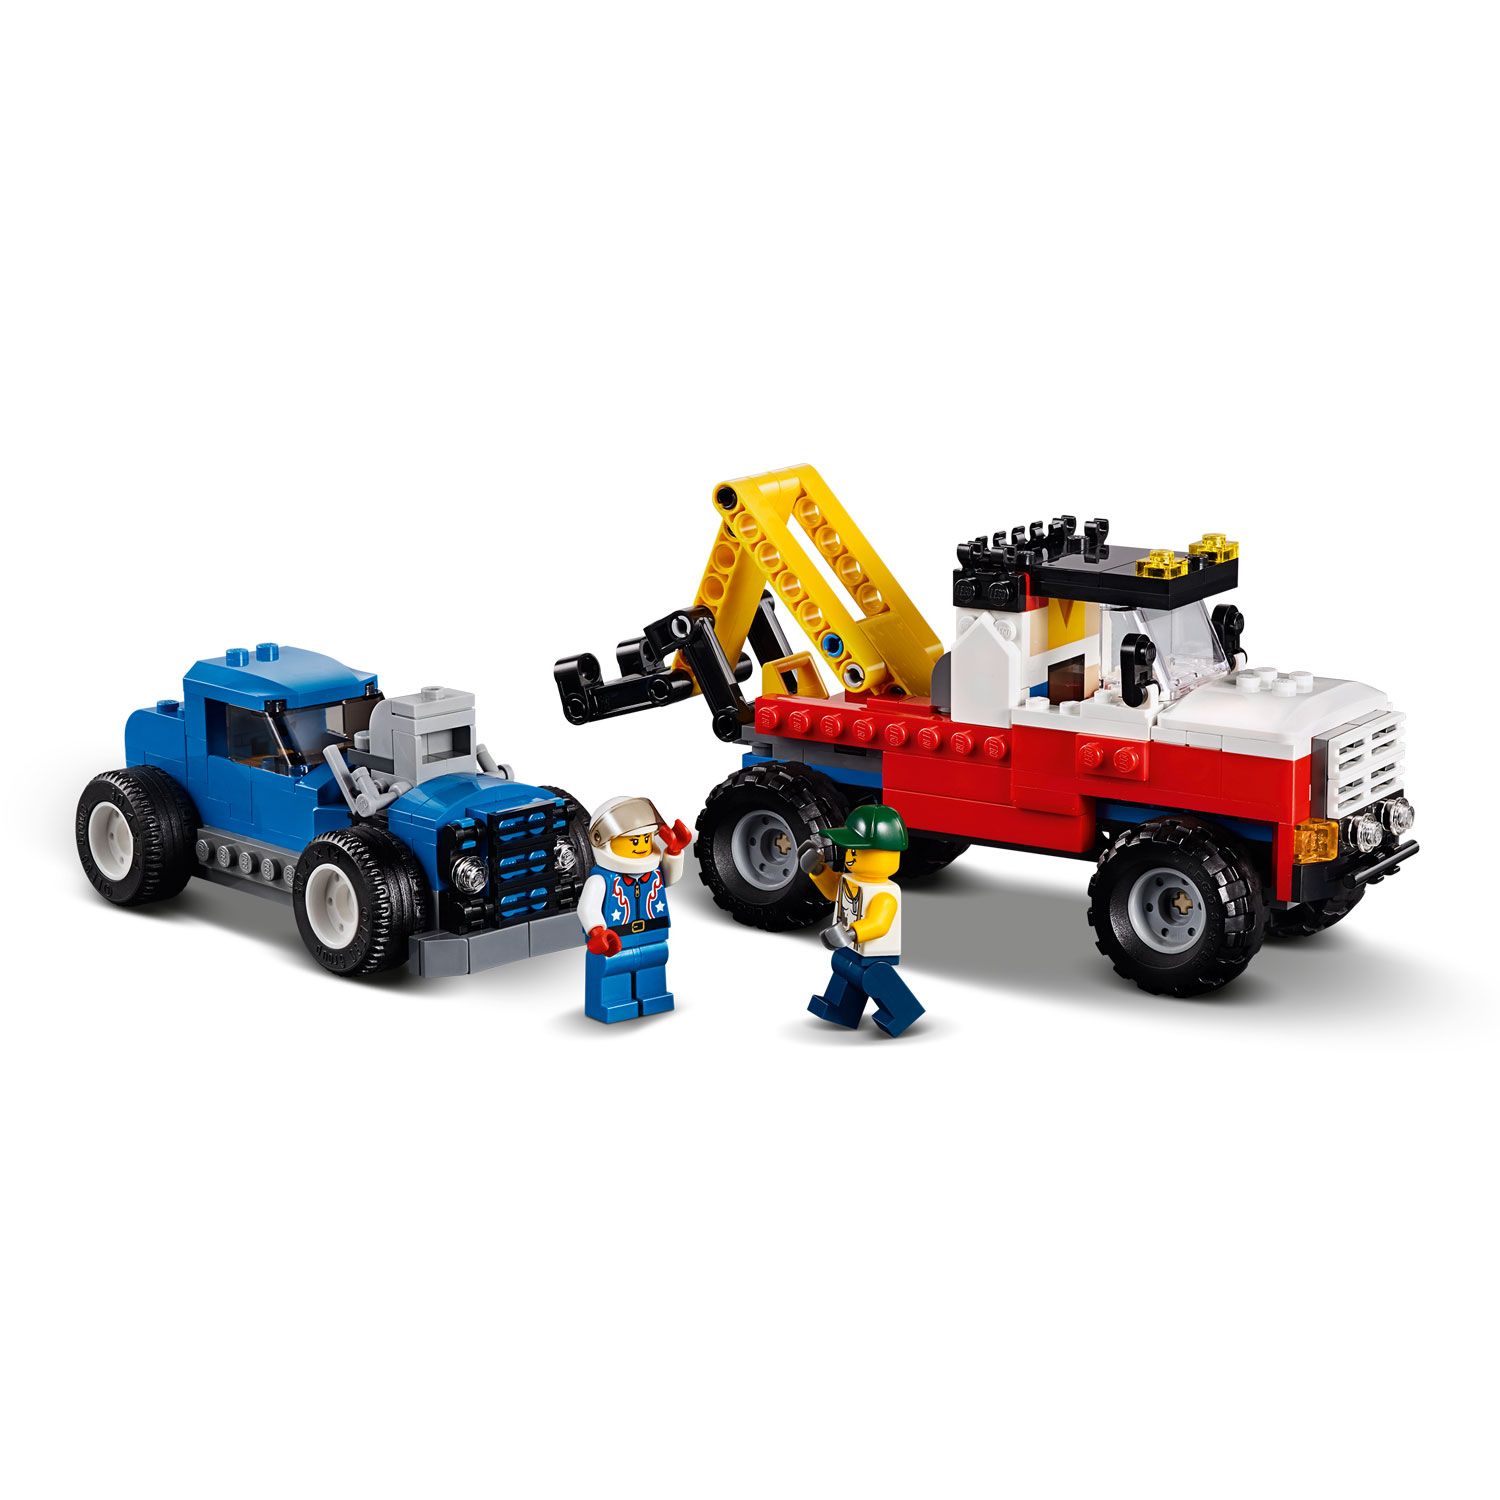 LEGO Creator 31085 Mobiele Stuntshow